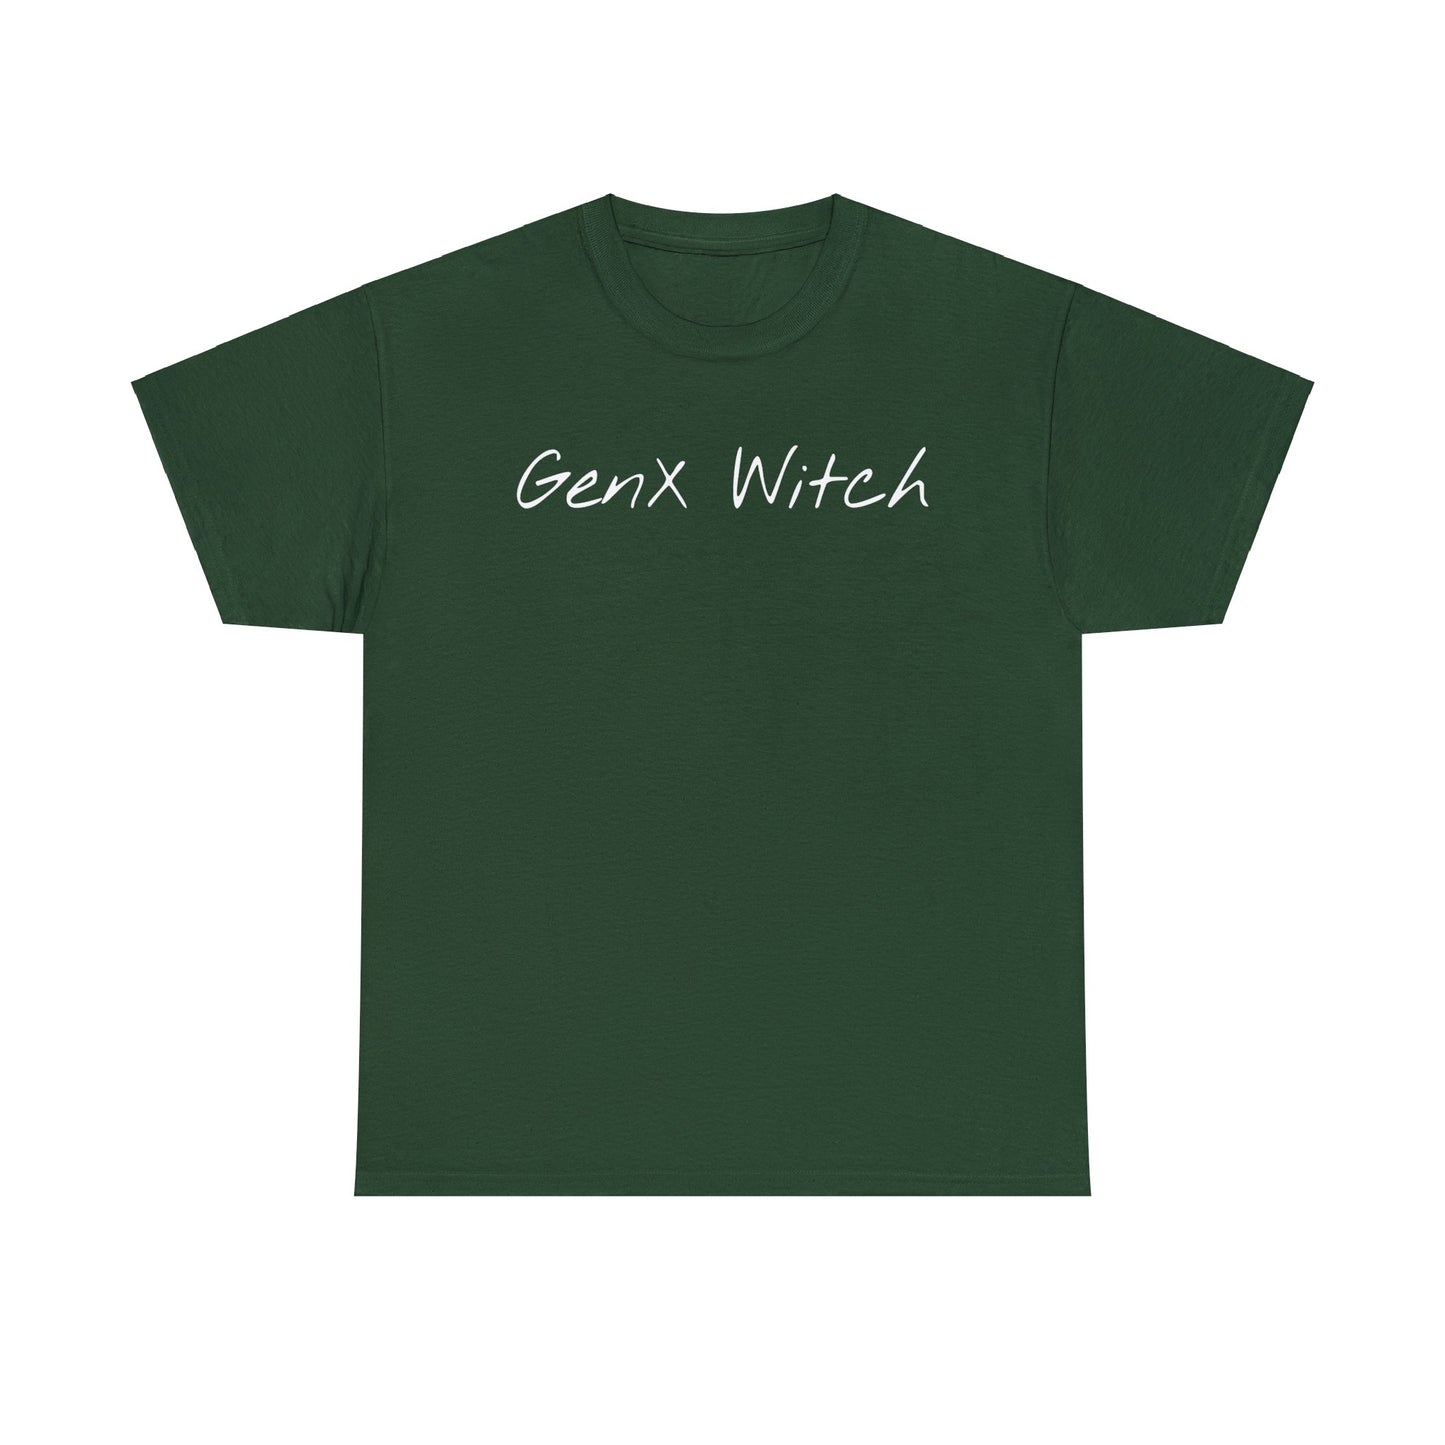 GenX Witch Cotton t-shirt